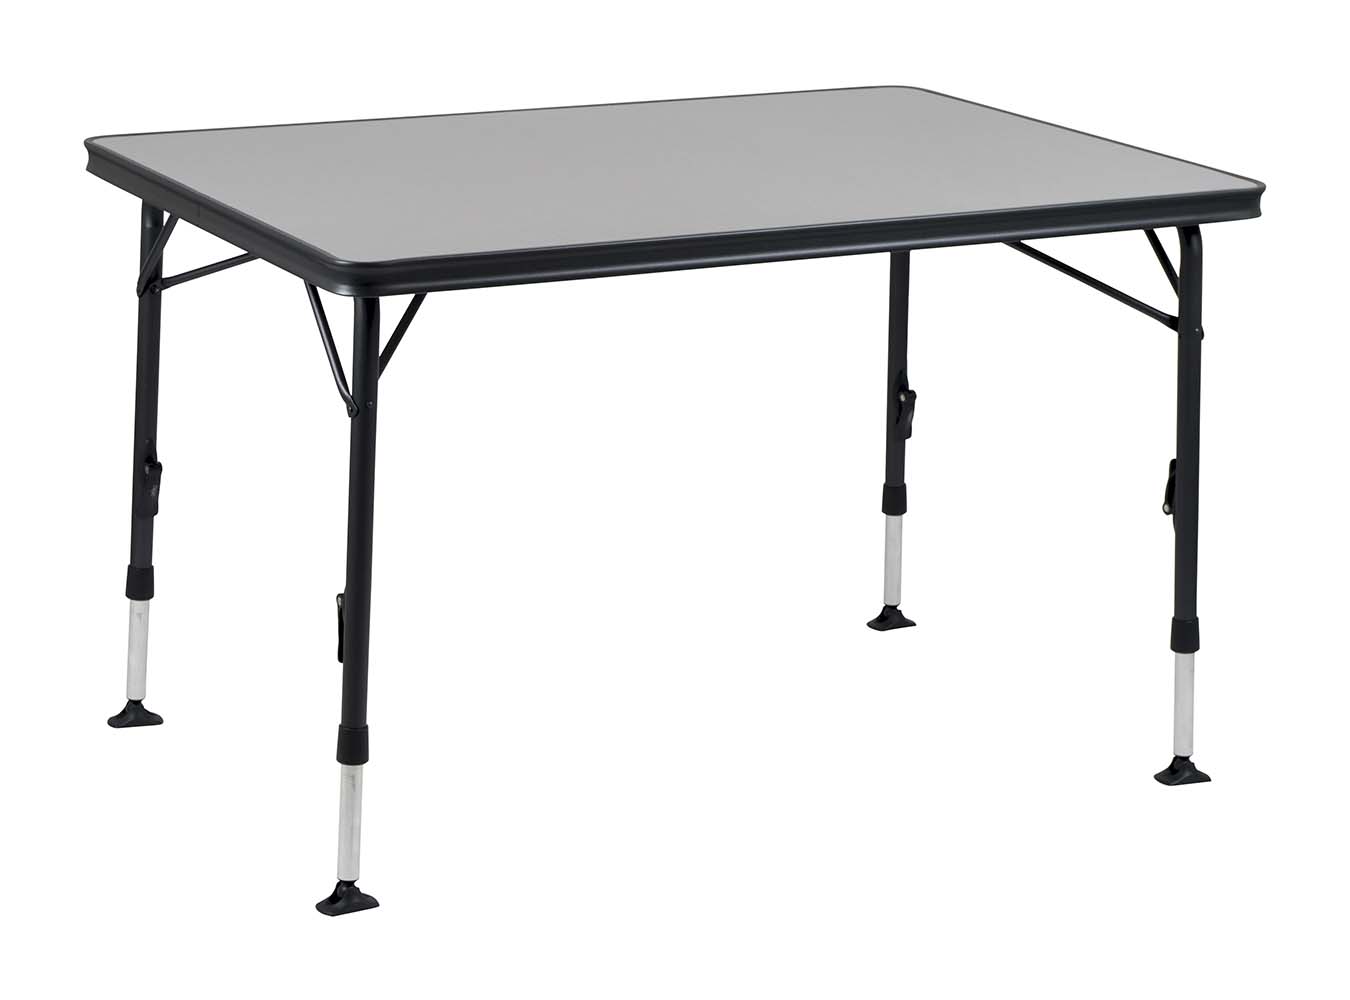 Crespo - Table - AP/272 - 120x80 cm - Black